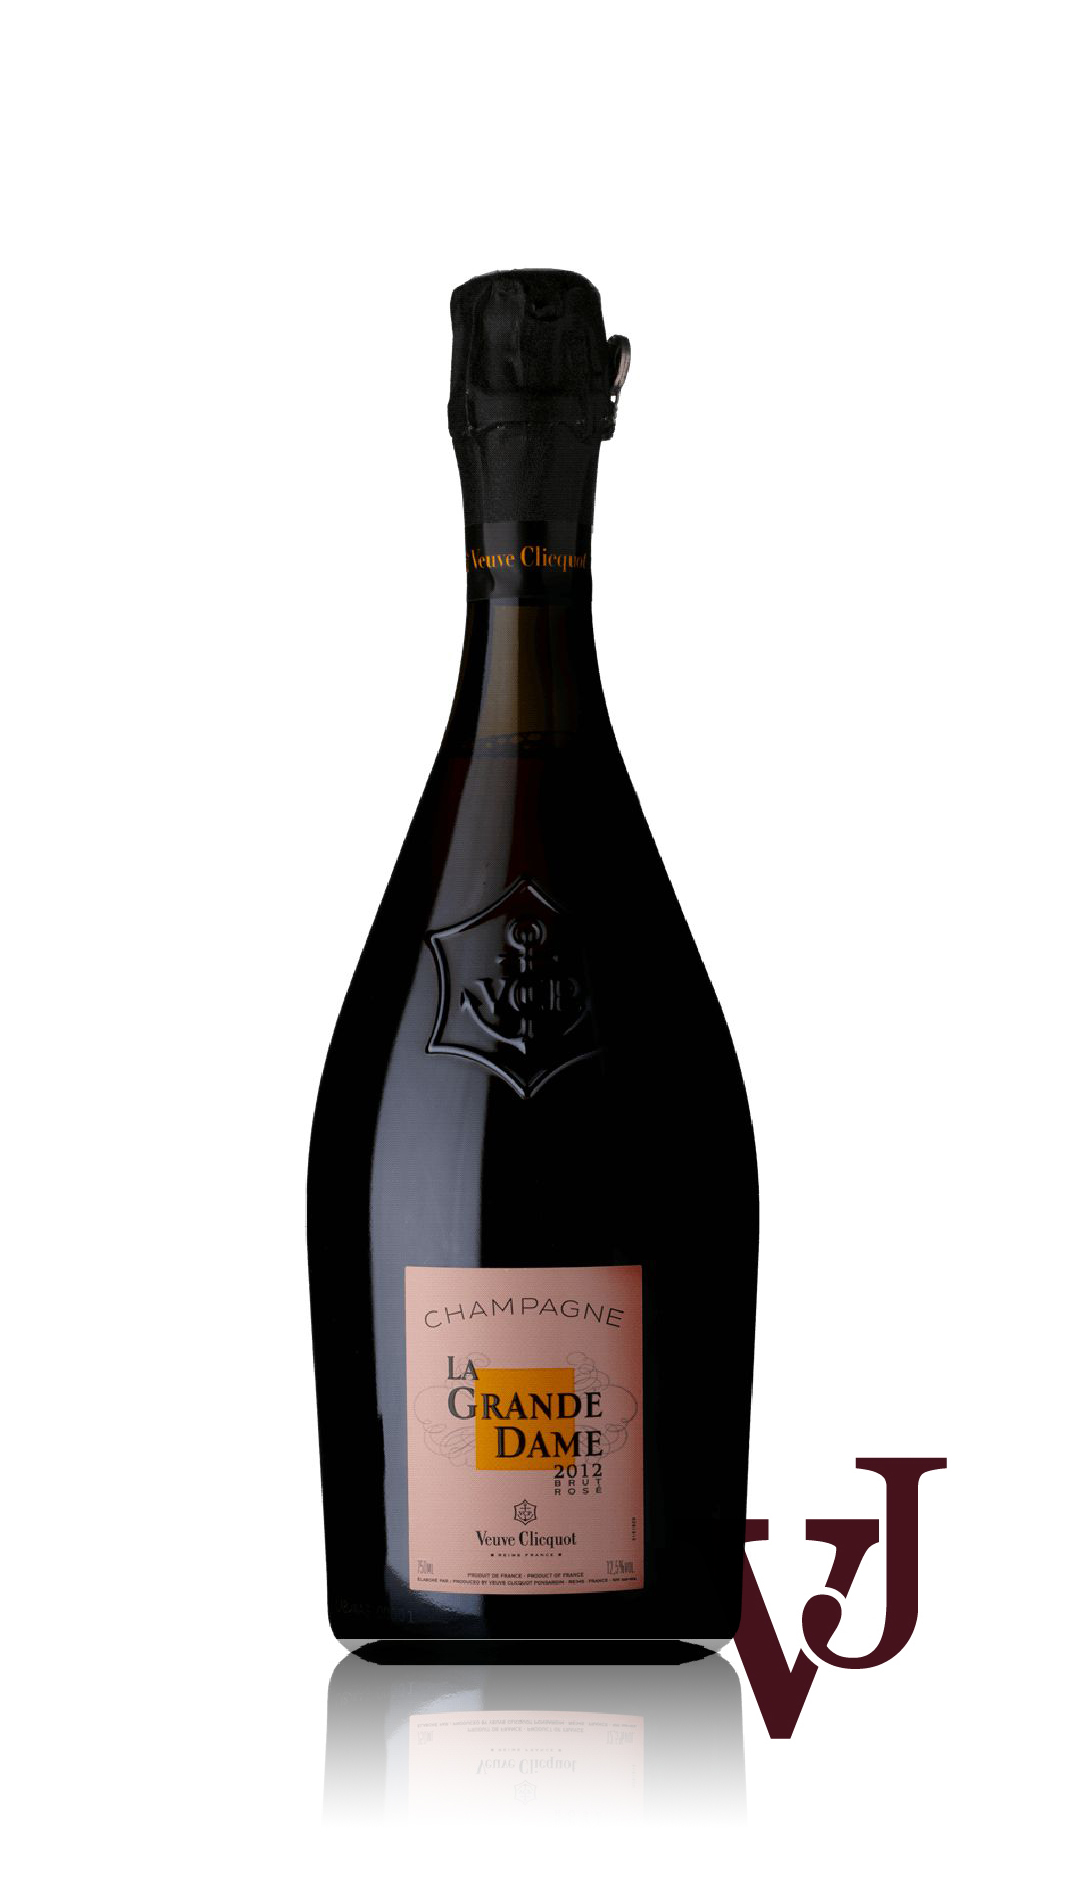 Rosé Vin - Veuve Clicquot La Grande Dame Rosé 2012 artikel nummer 9435801 från producenten Veuve Clicquot från Frankrike